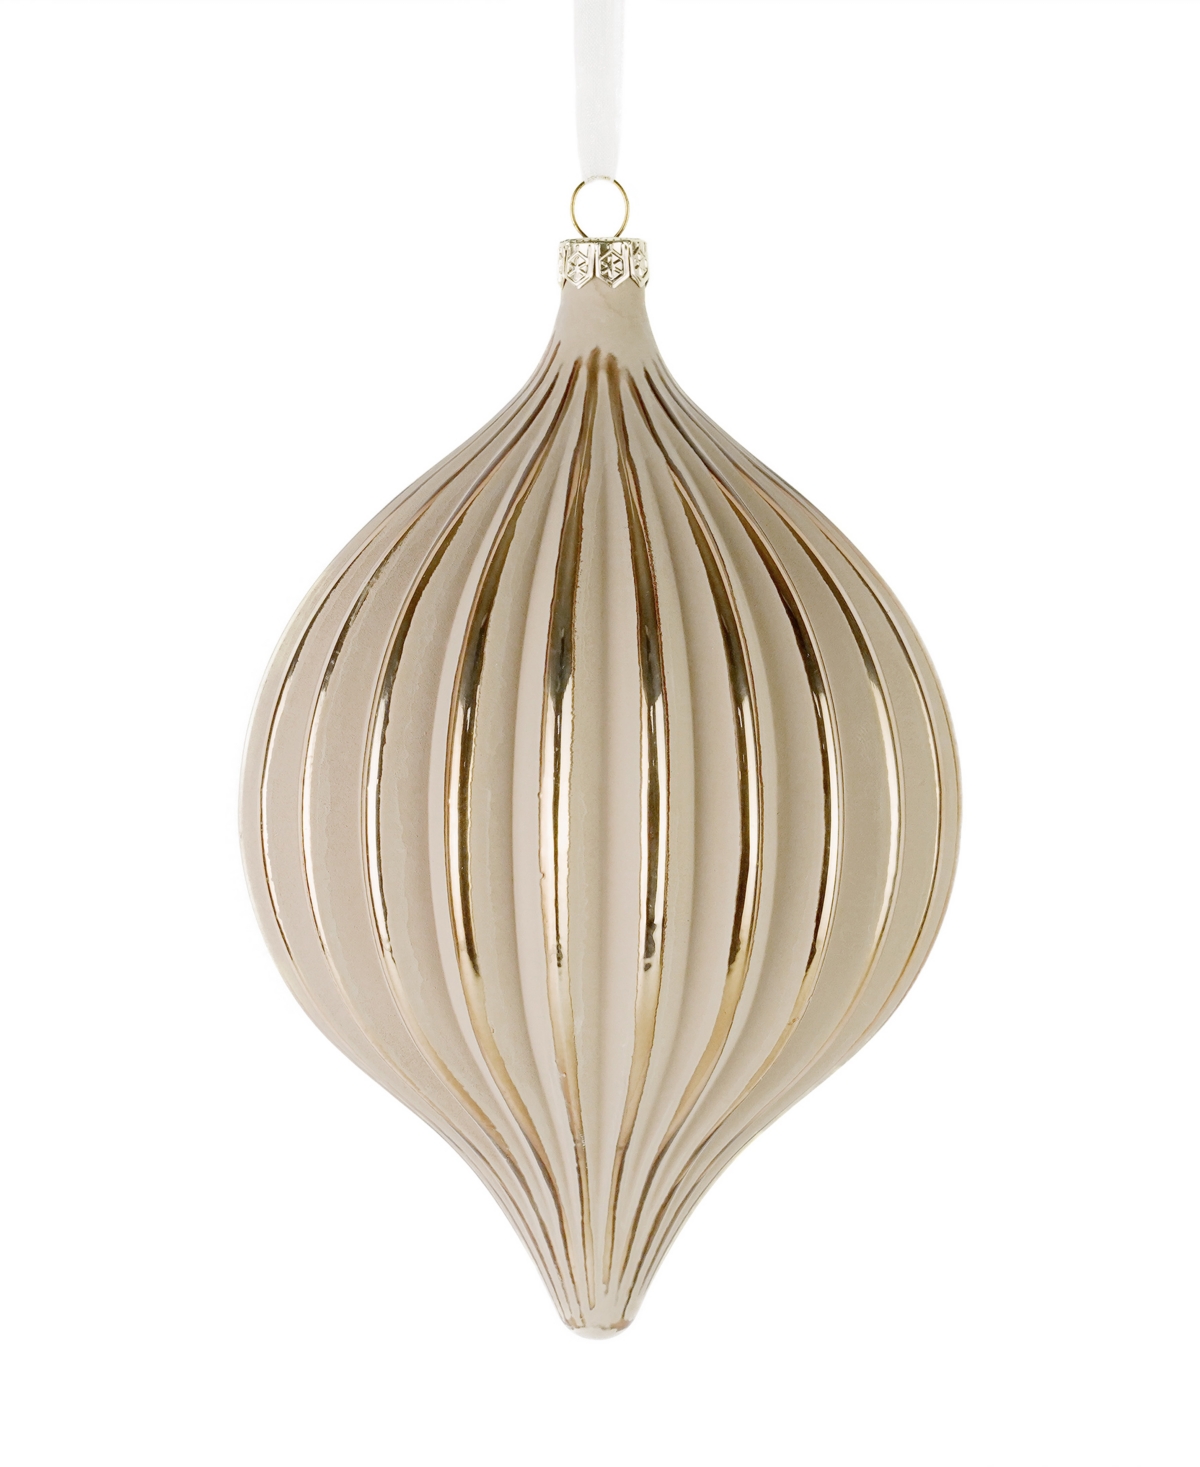 Gesso Onion Glass Ornament 120 Millimeter, Set of 3 - Shitake